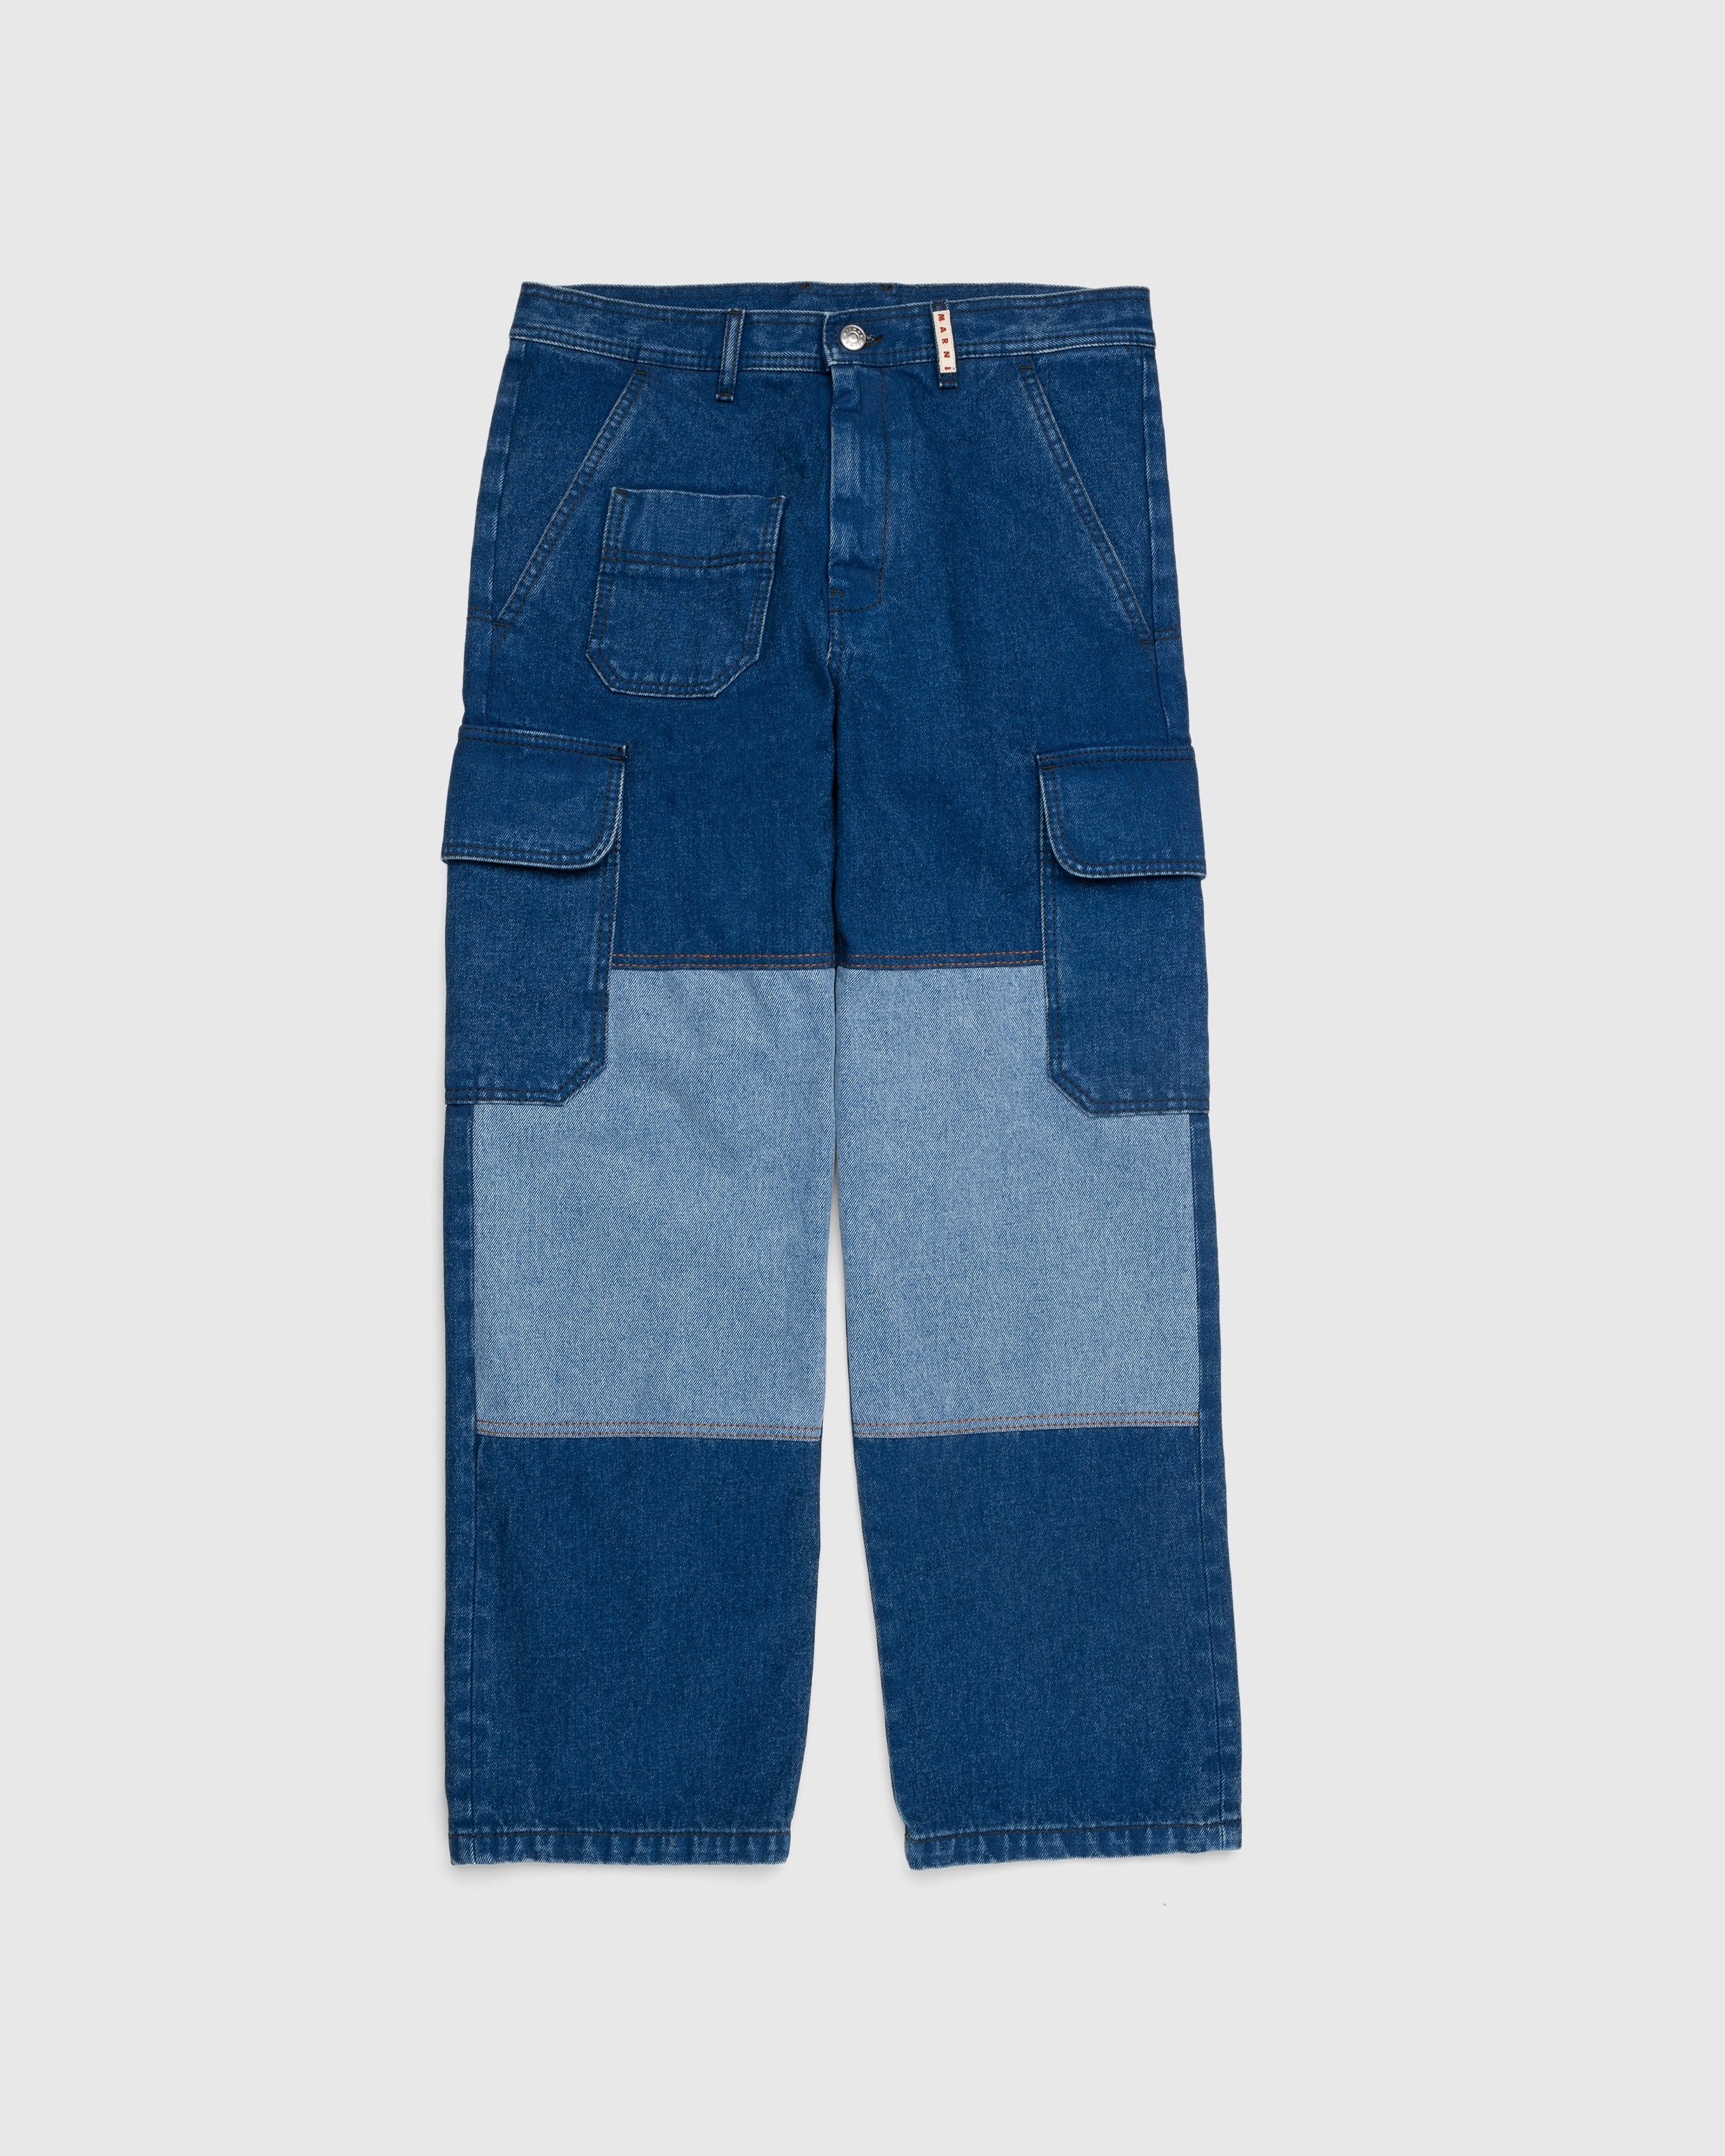 Marni – Denim Cargo Pants Blue - Pants - Blue - Image 1